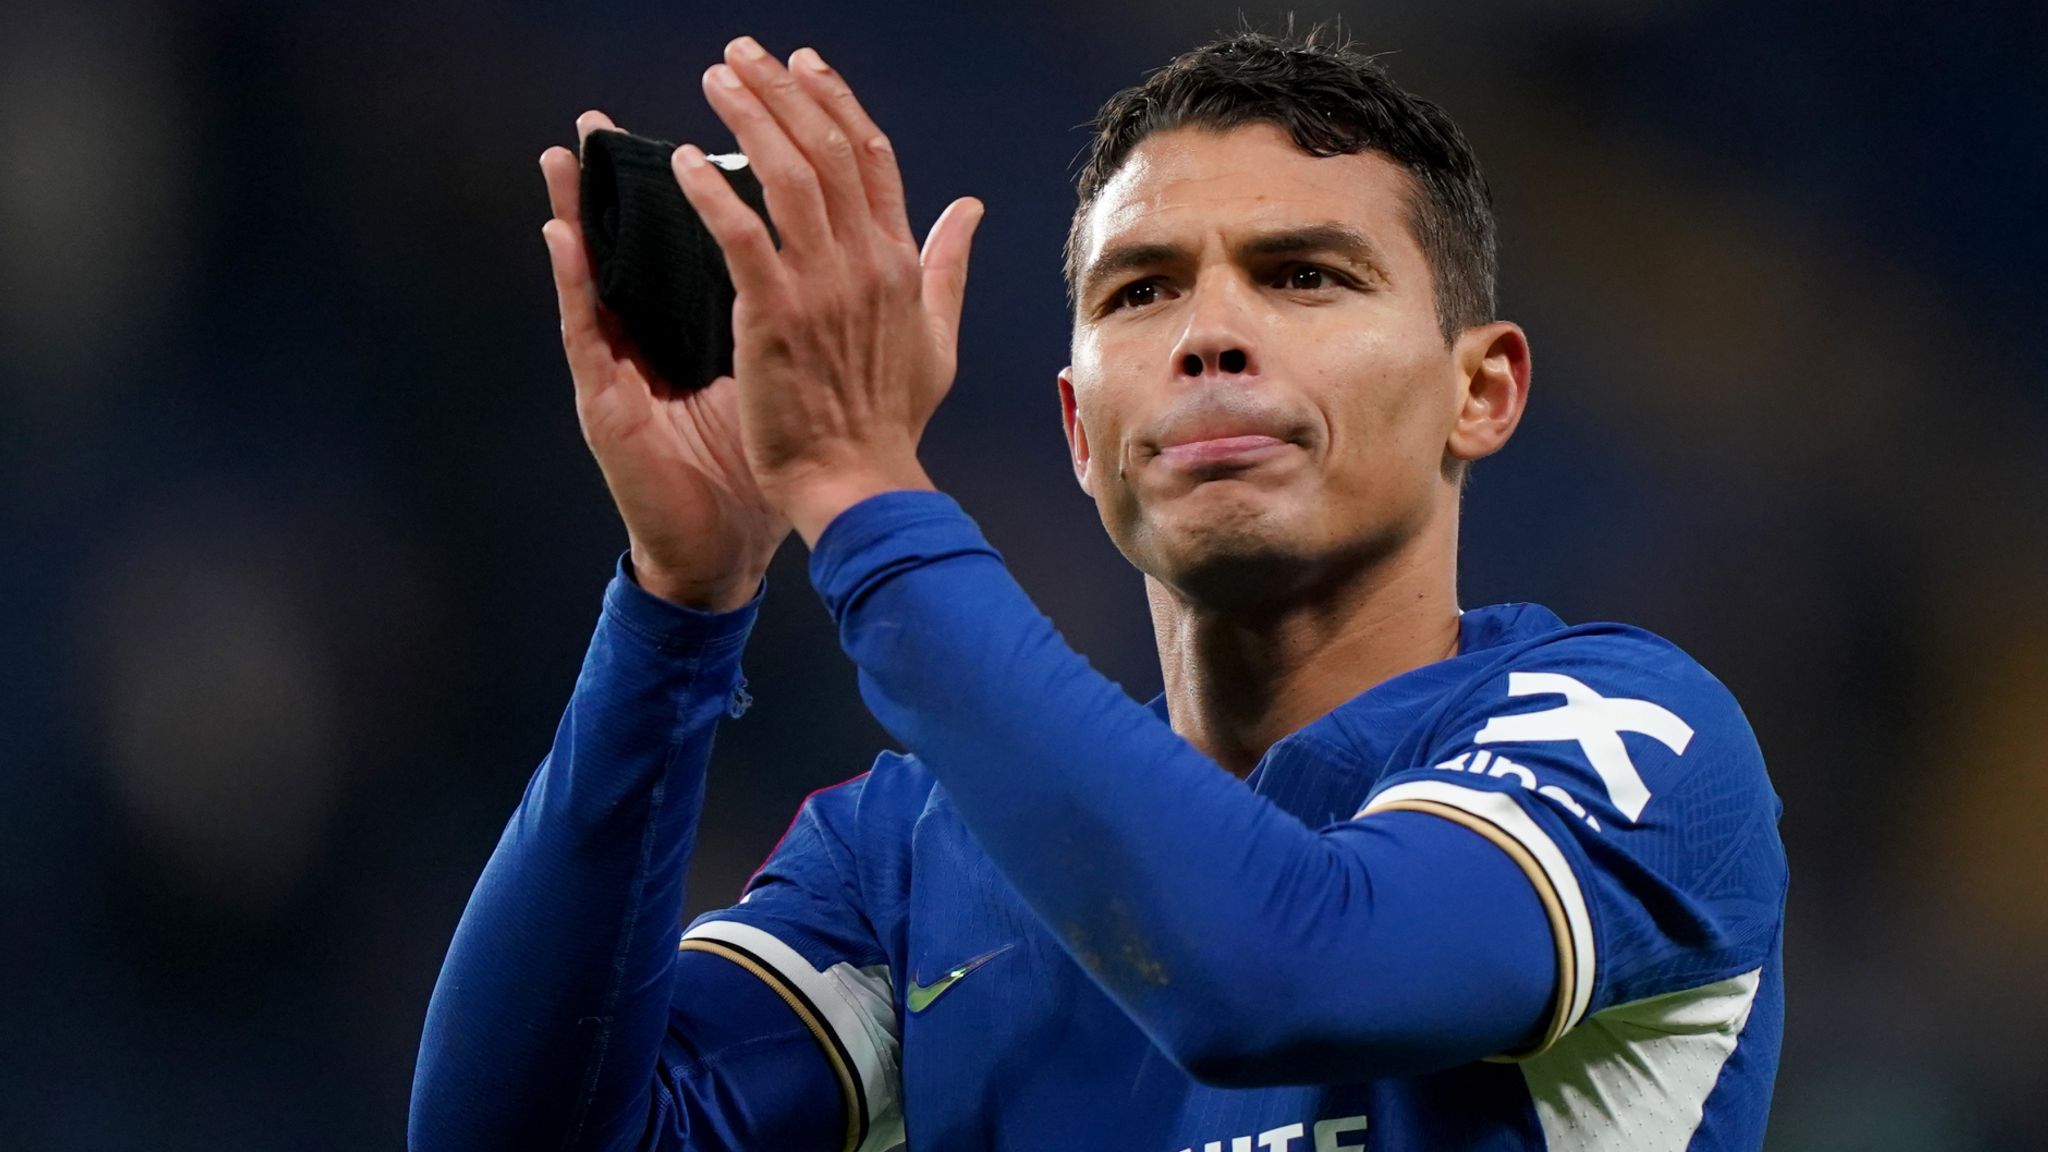 Chelsea's Defensive Pillar Thiago Silva Bids Farewell After Legendary Spell at Stamford Bridge